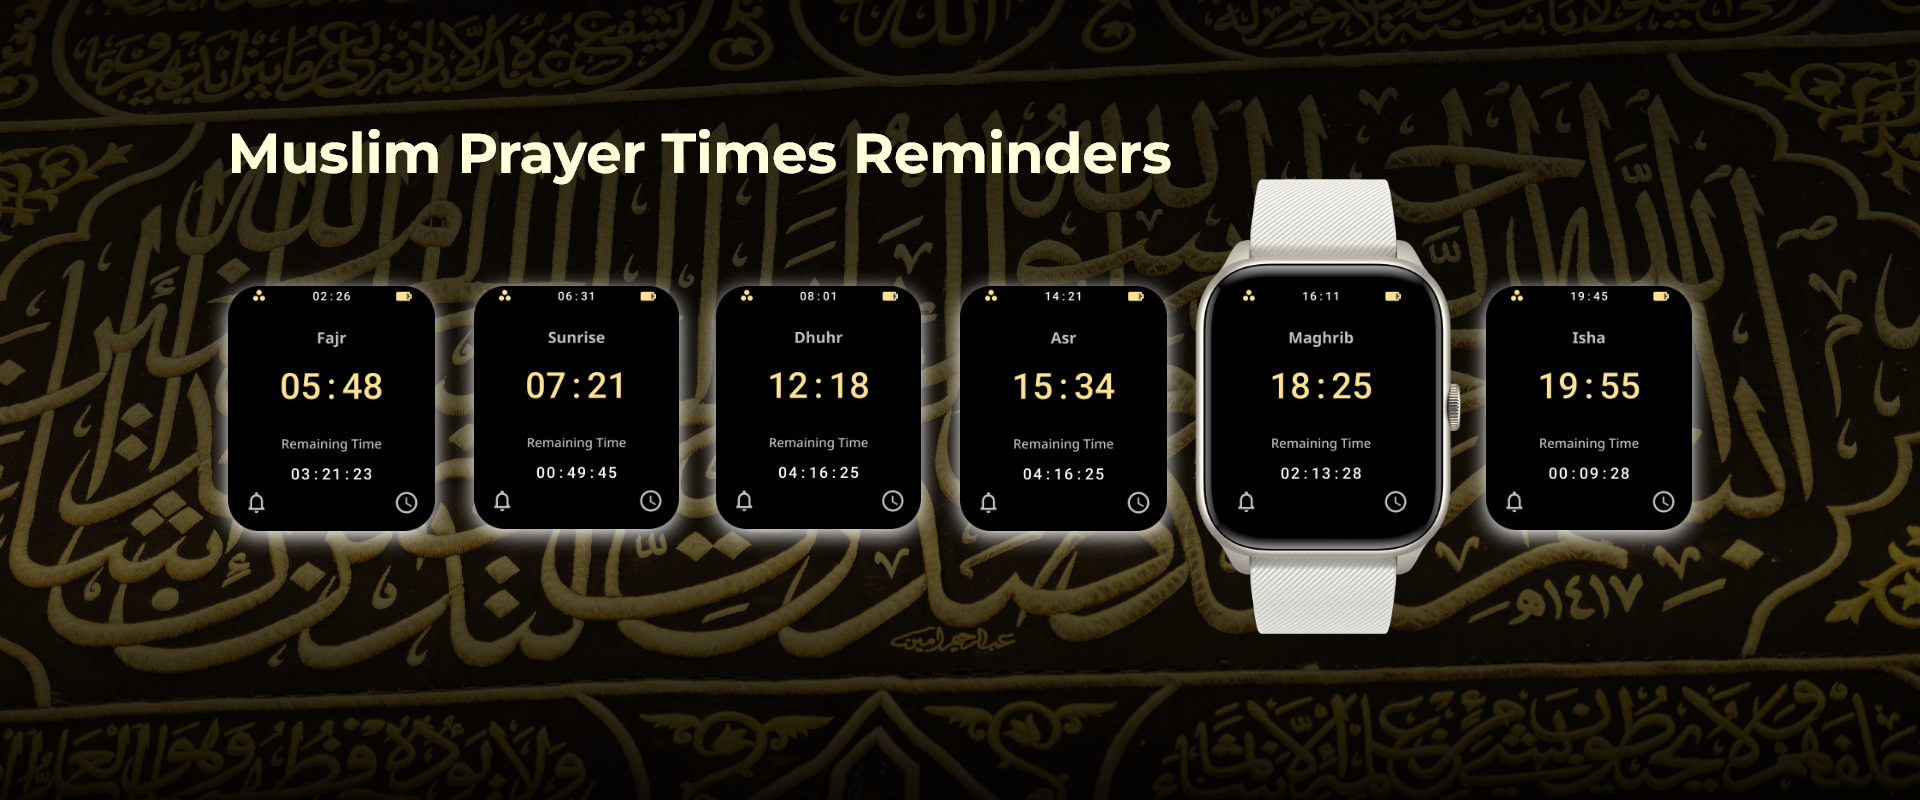 Muslim Prayer Times Reminders